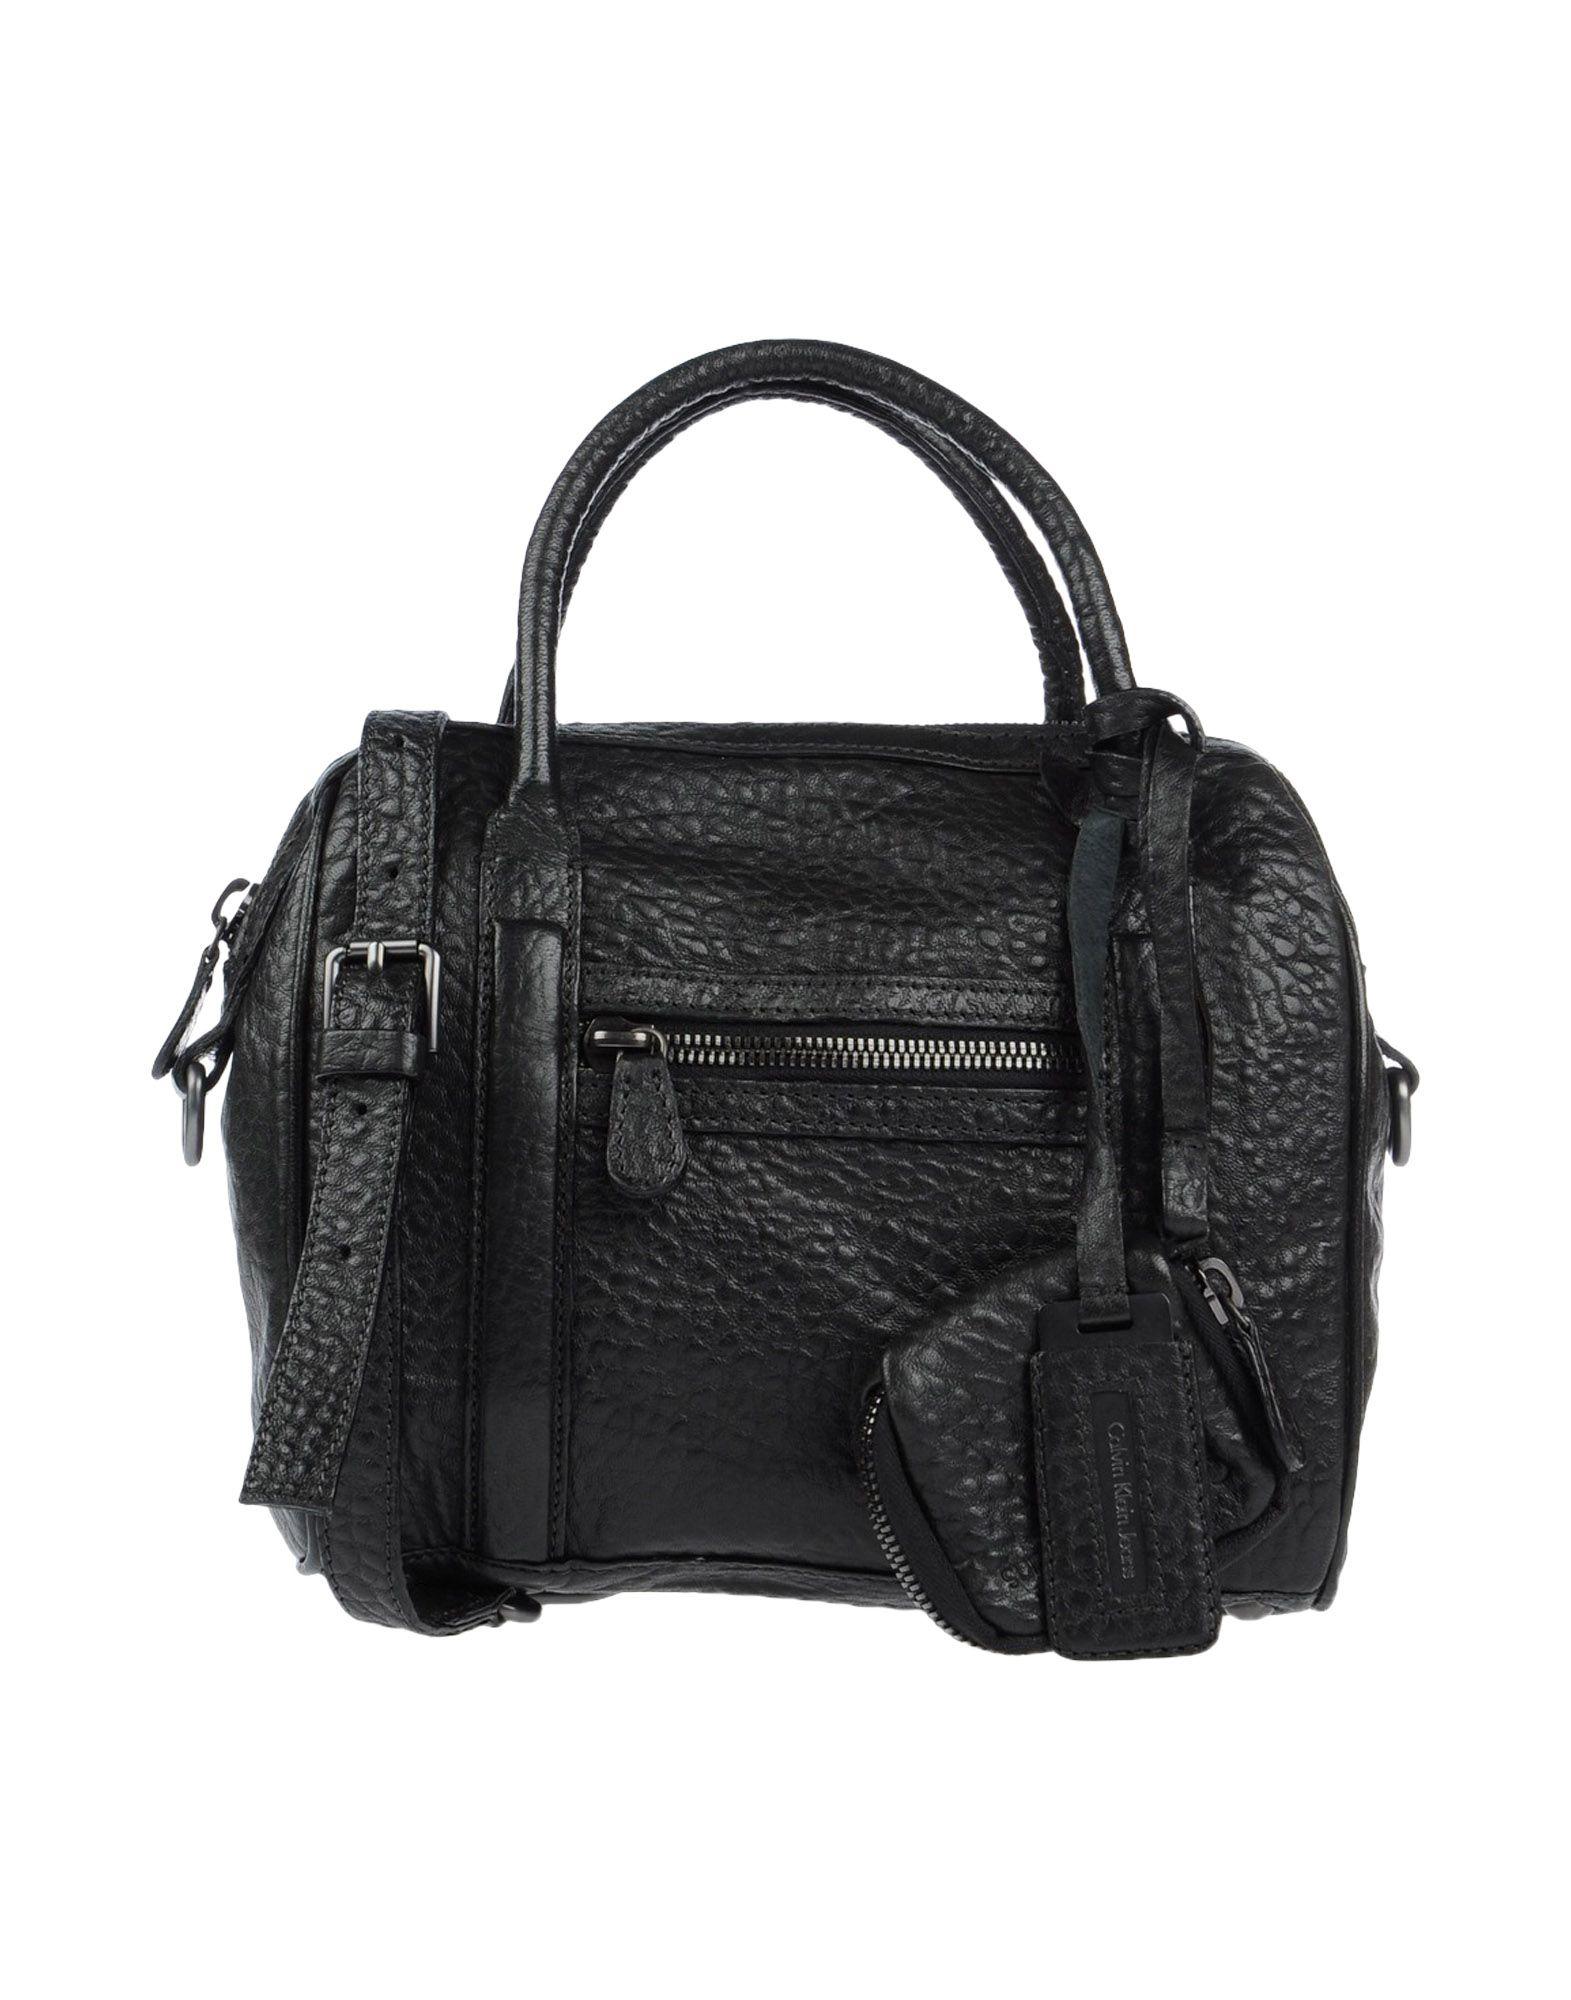 Lyst - Calvin Klein Jeans Handbag in Black